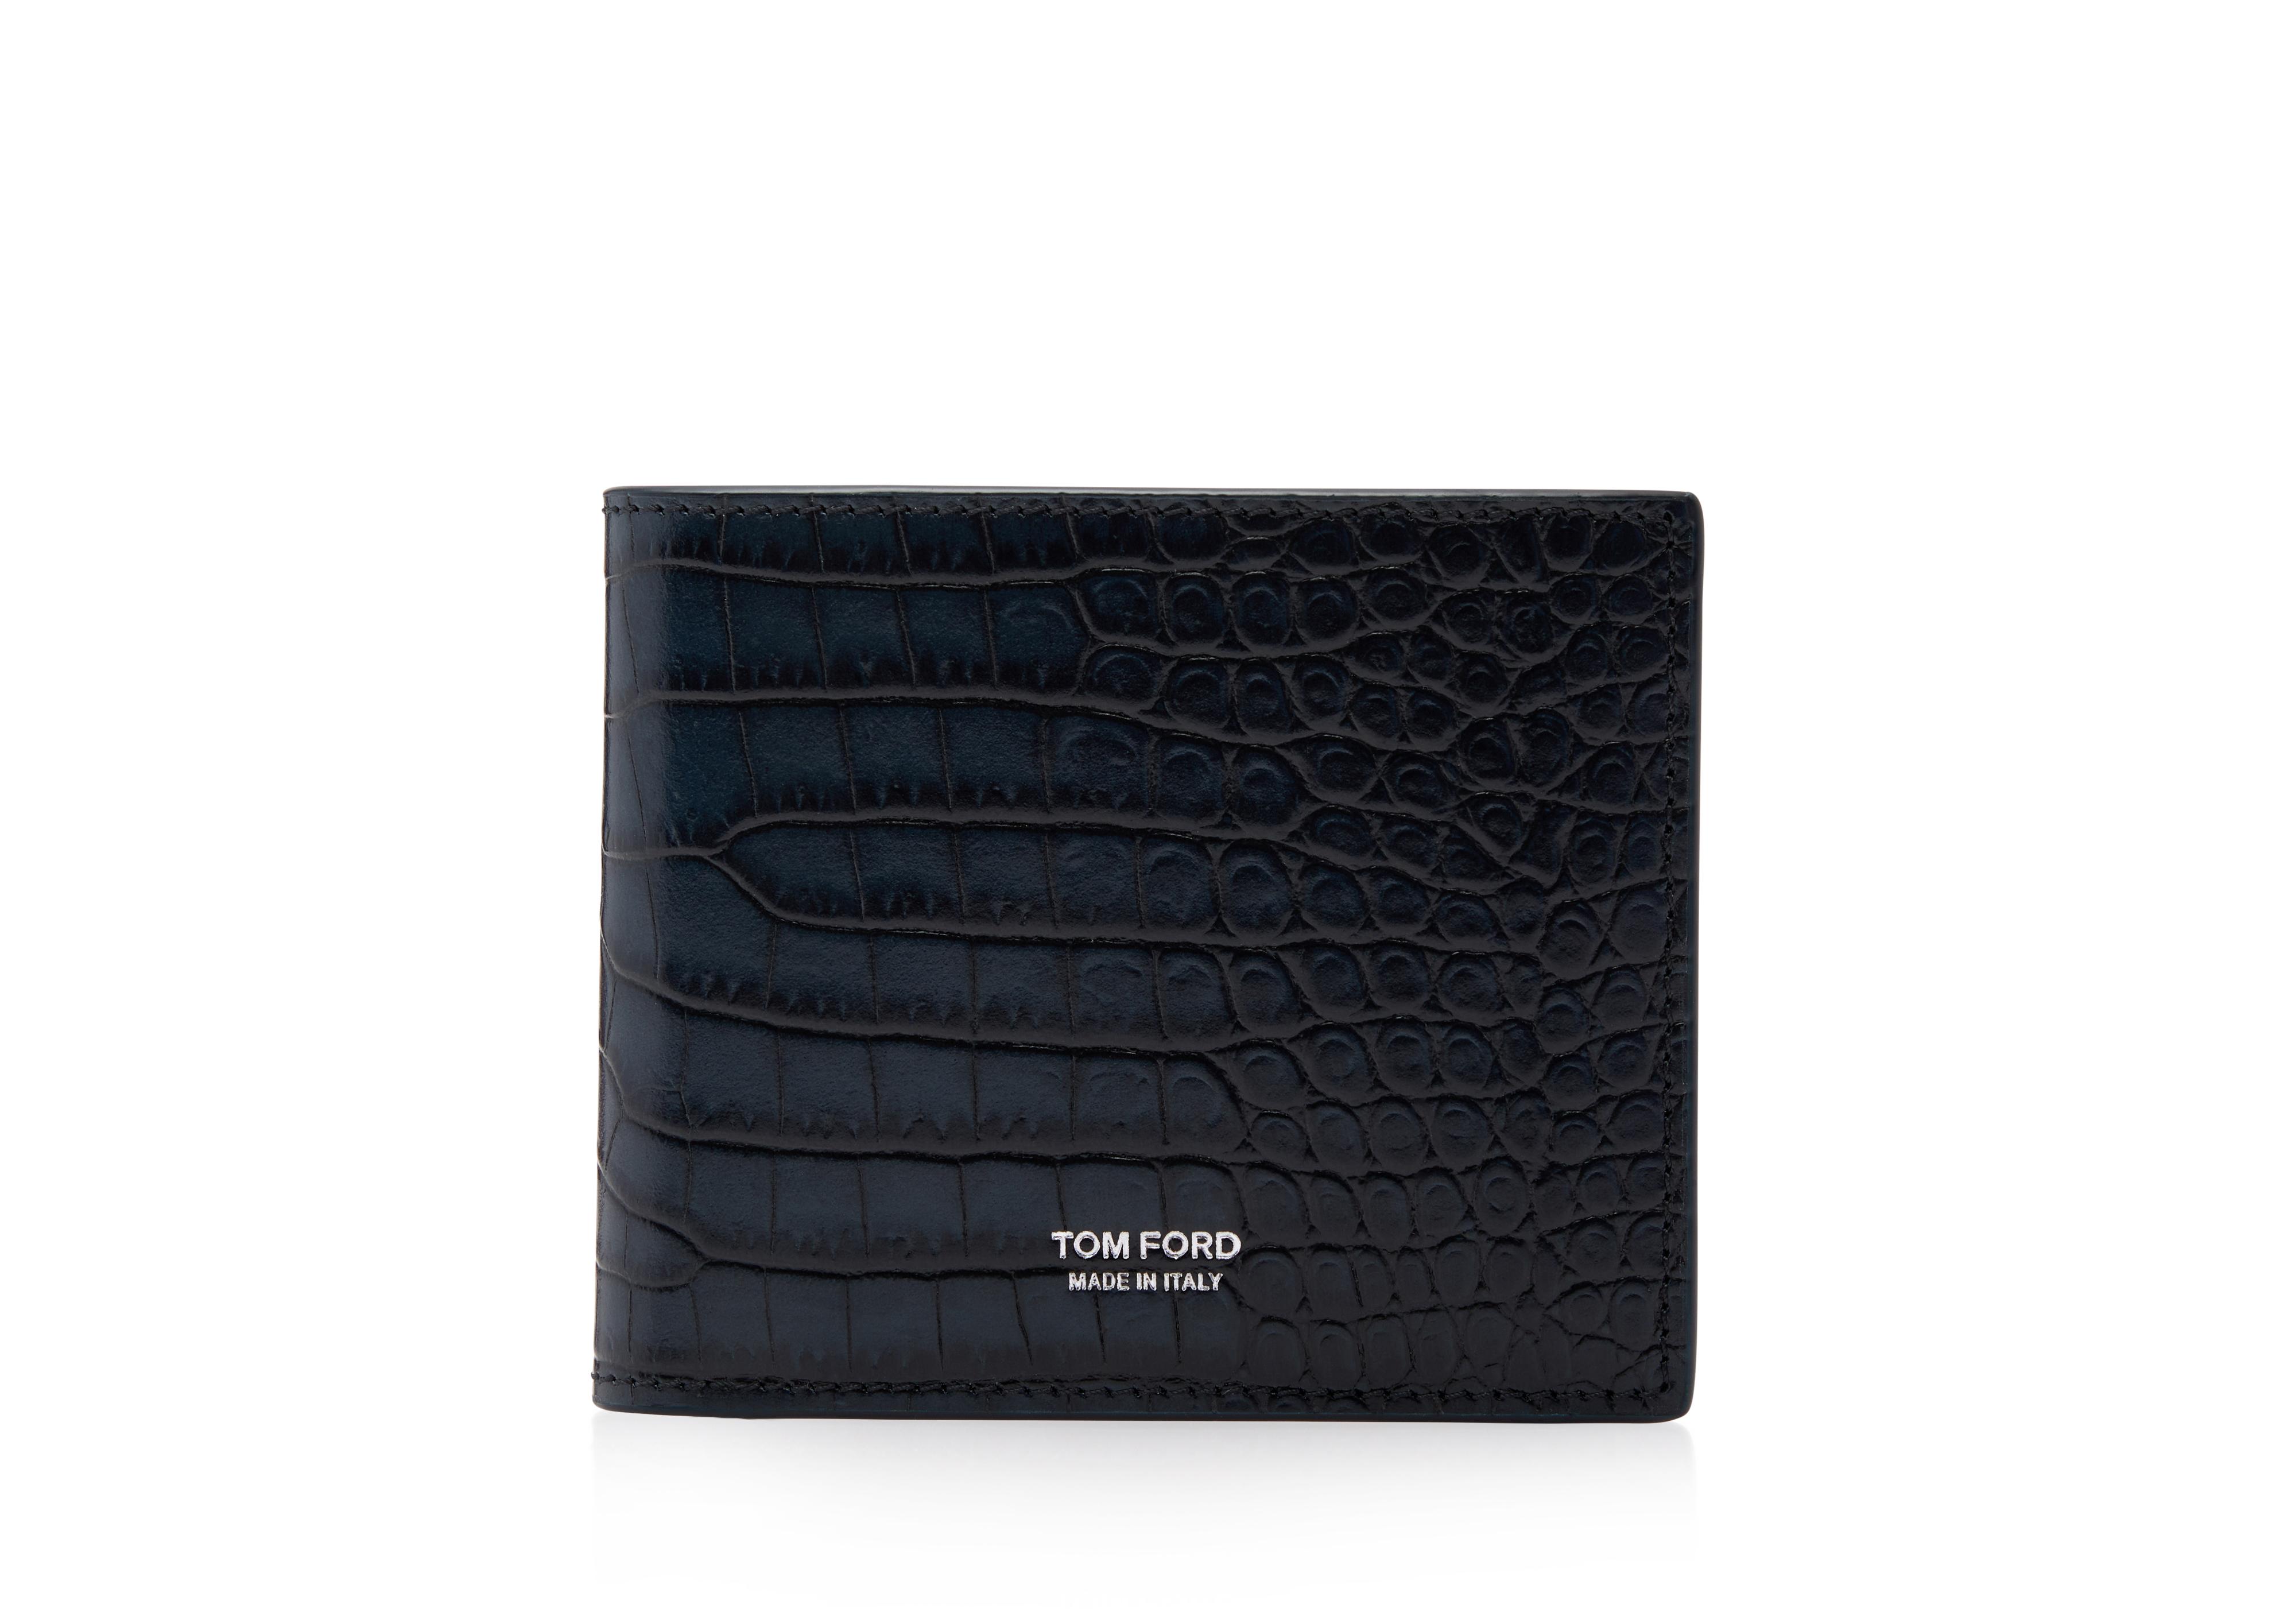 Saint Laurent Crocodile-Embossed Money Clip Wallet - Black for Men